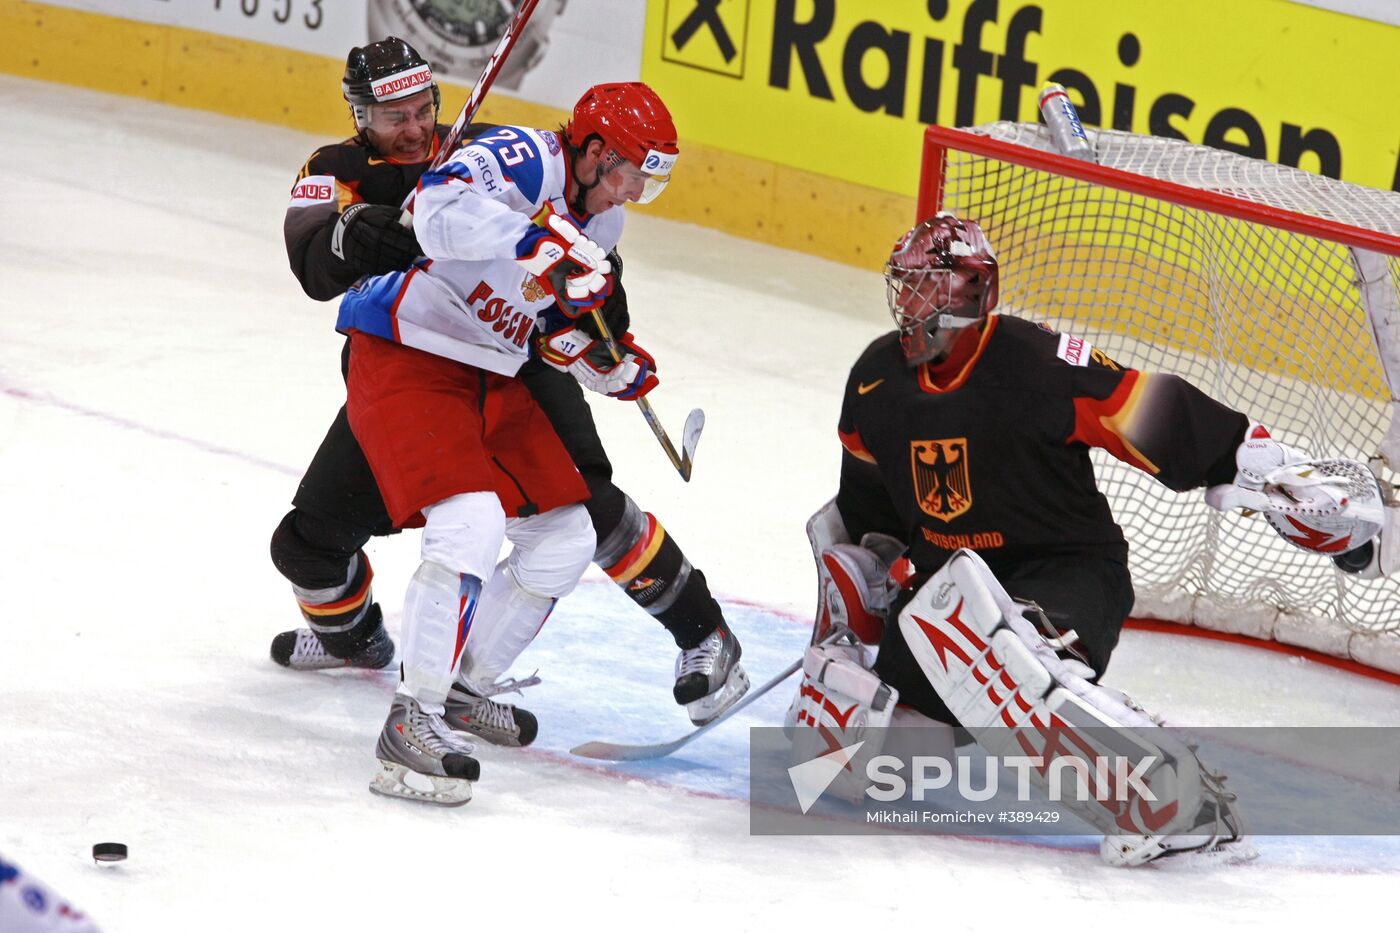 2009 Ice Hockey World Championship. Russia vs. Germany